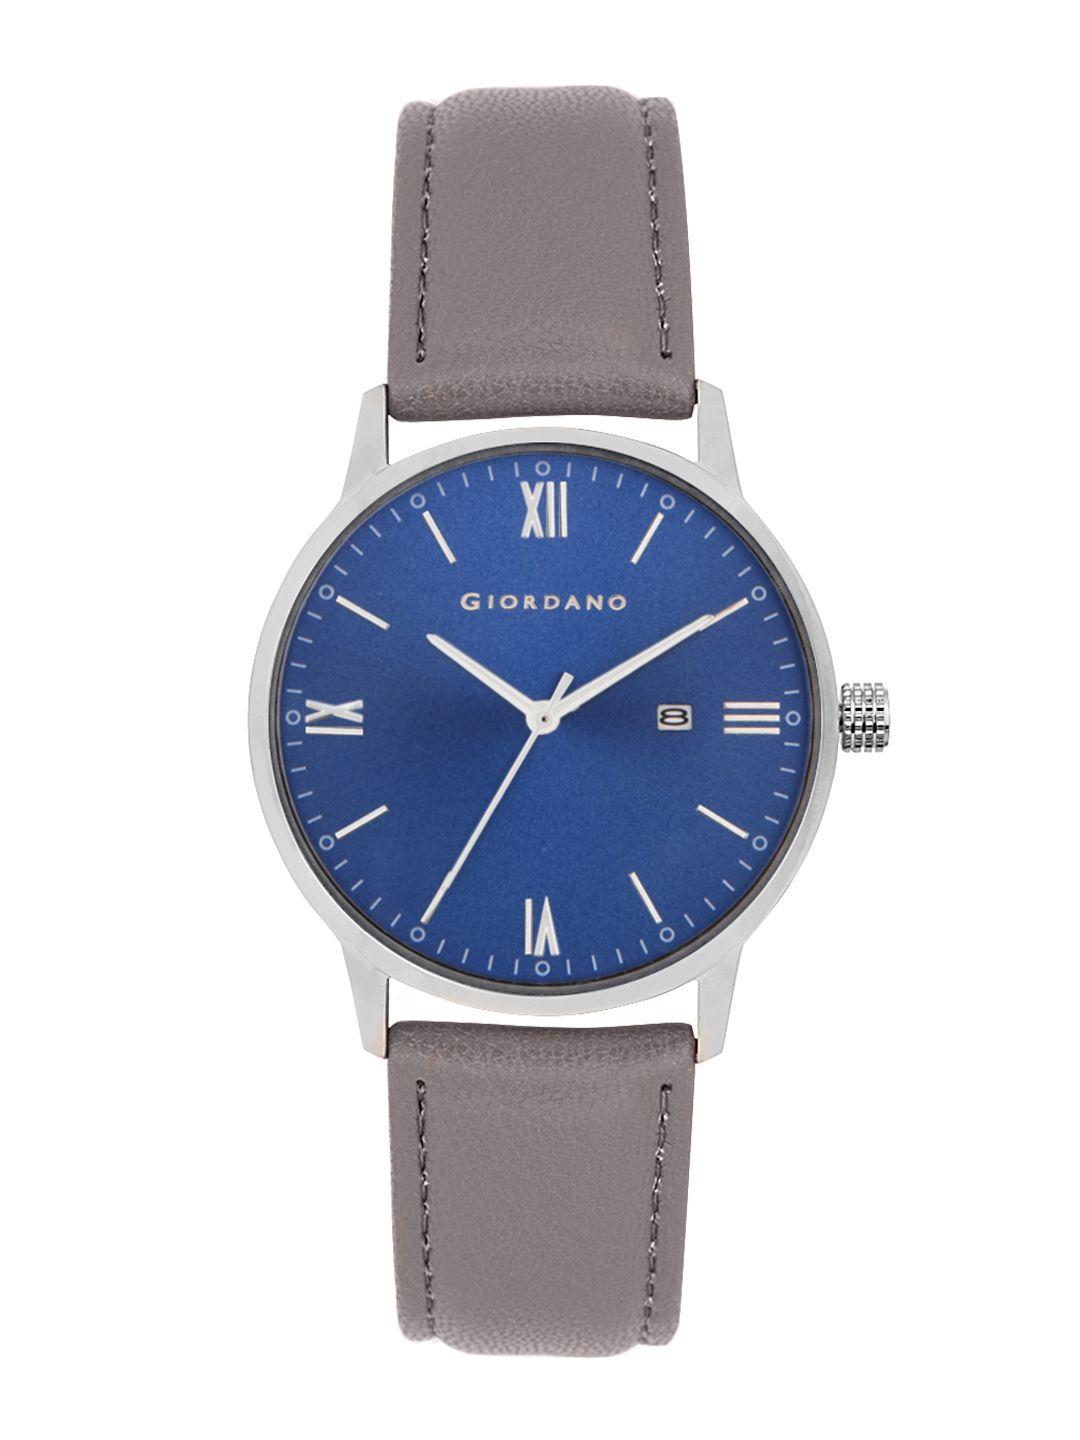 giordano-men-blue-&-grey-leather-analogue-watch-gd-4019-01